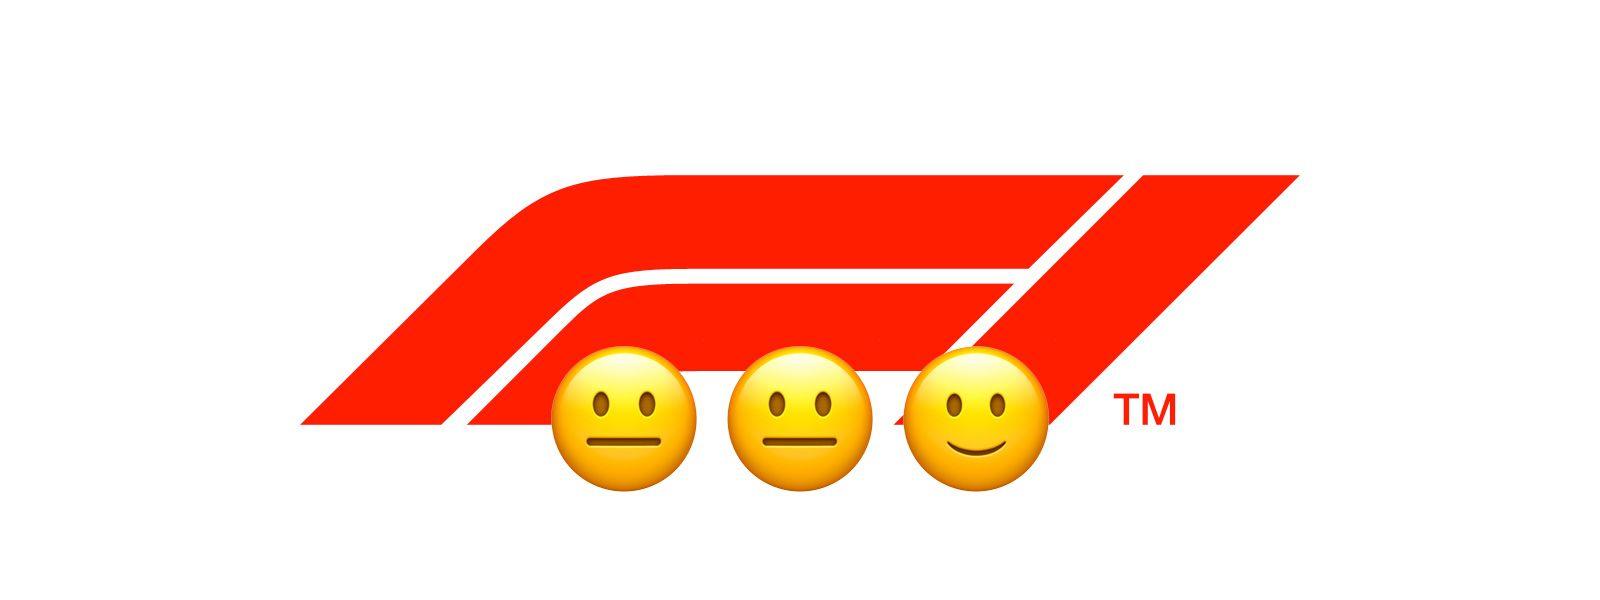 Appreciation Logo - Brand New: F1 Logo Appreciation